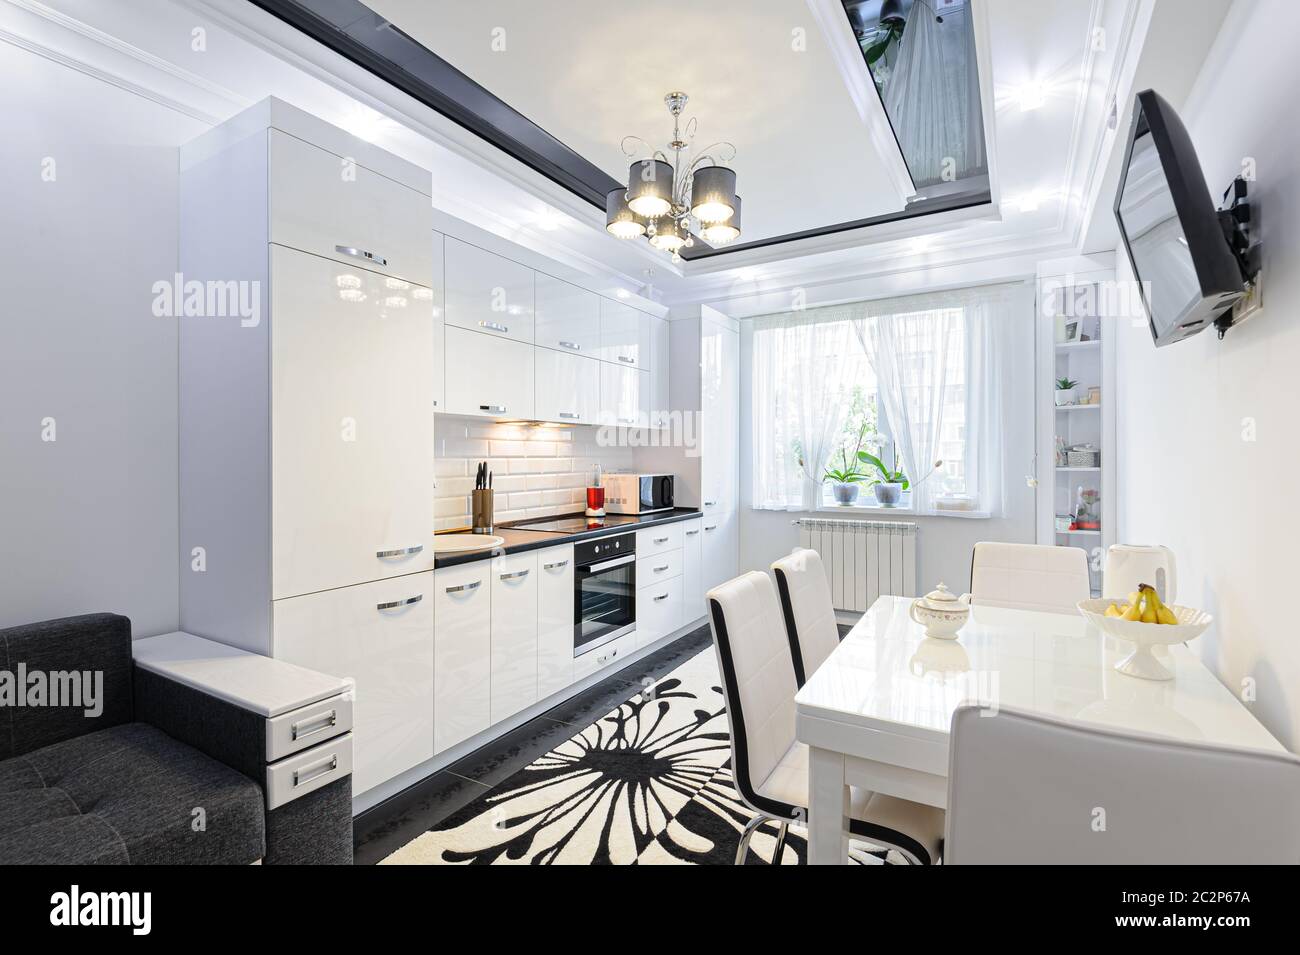 Luxury modern black and white kitchen interior Stock Photo